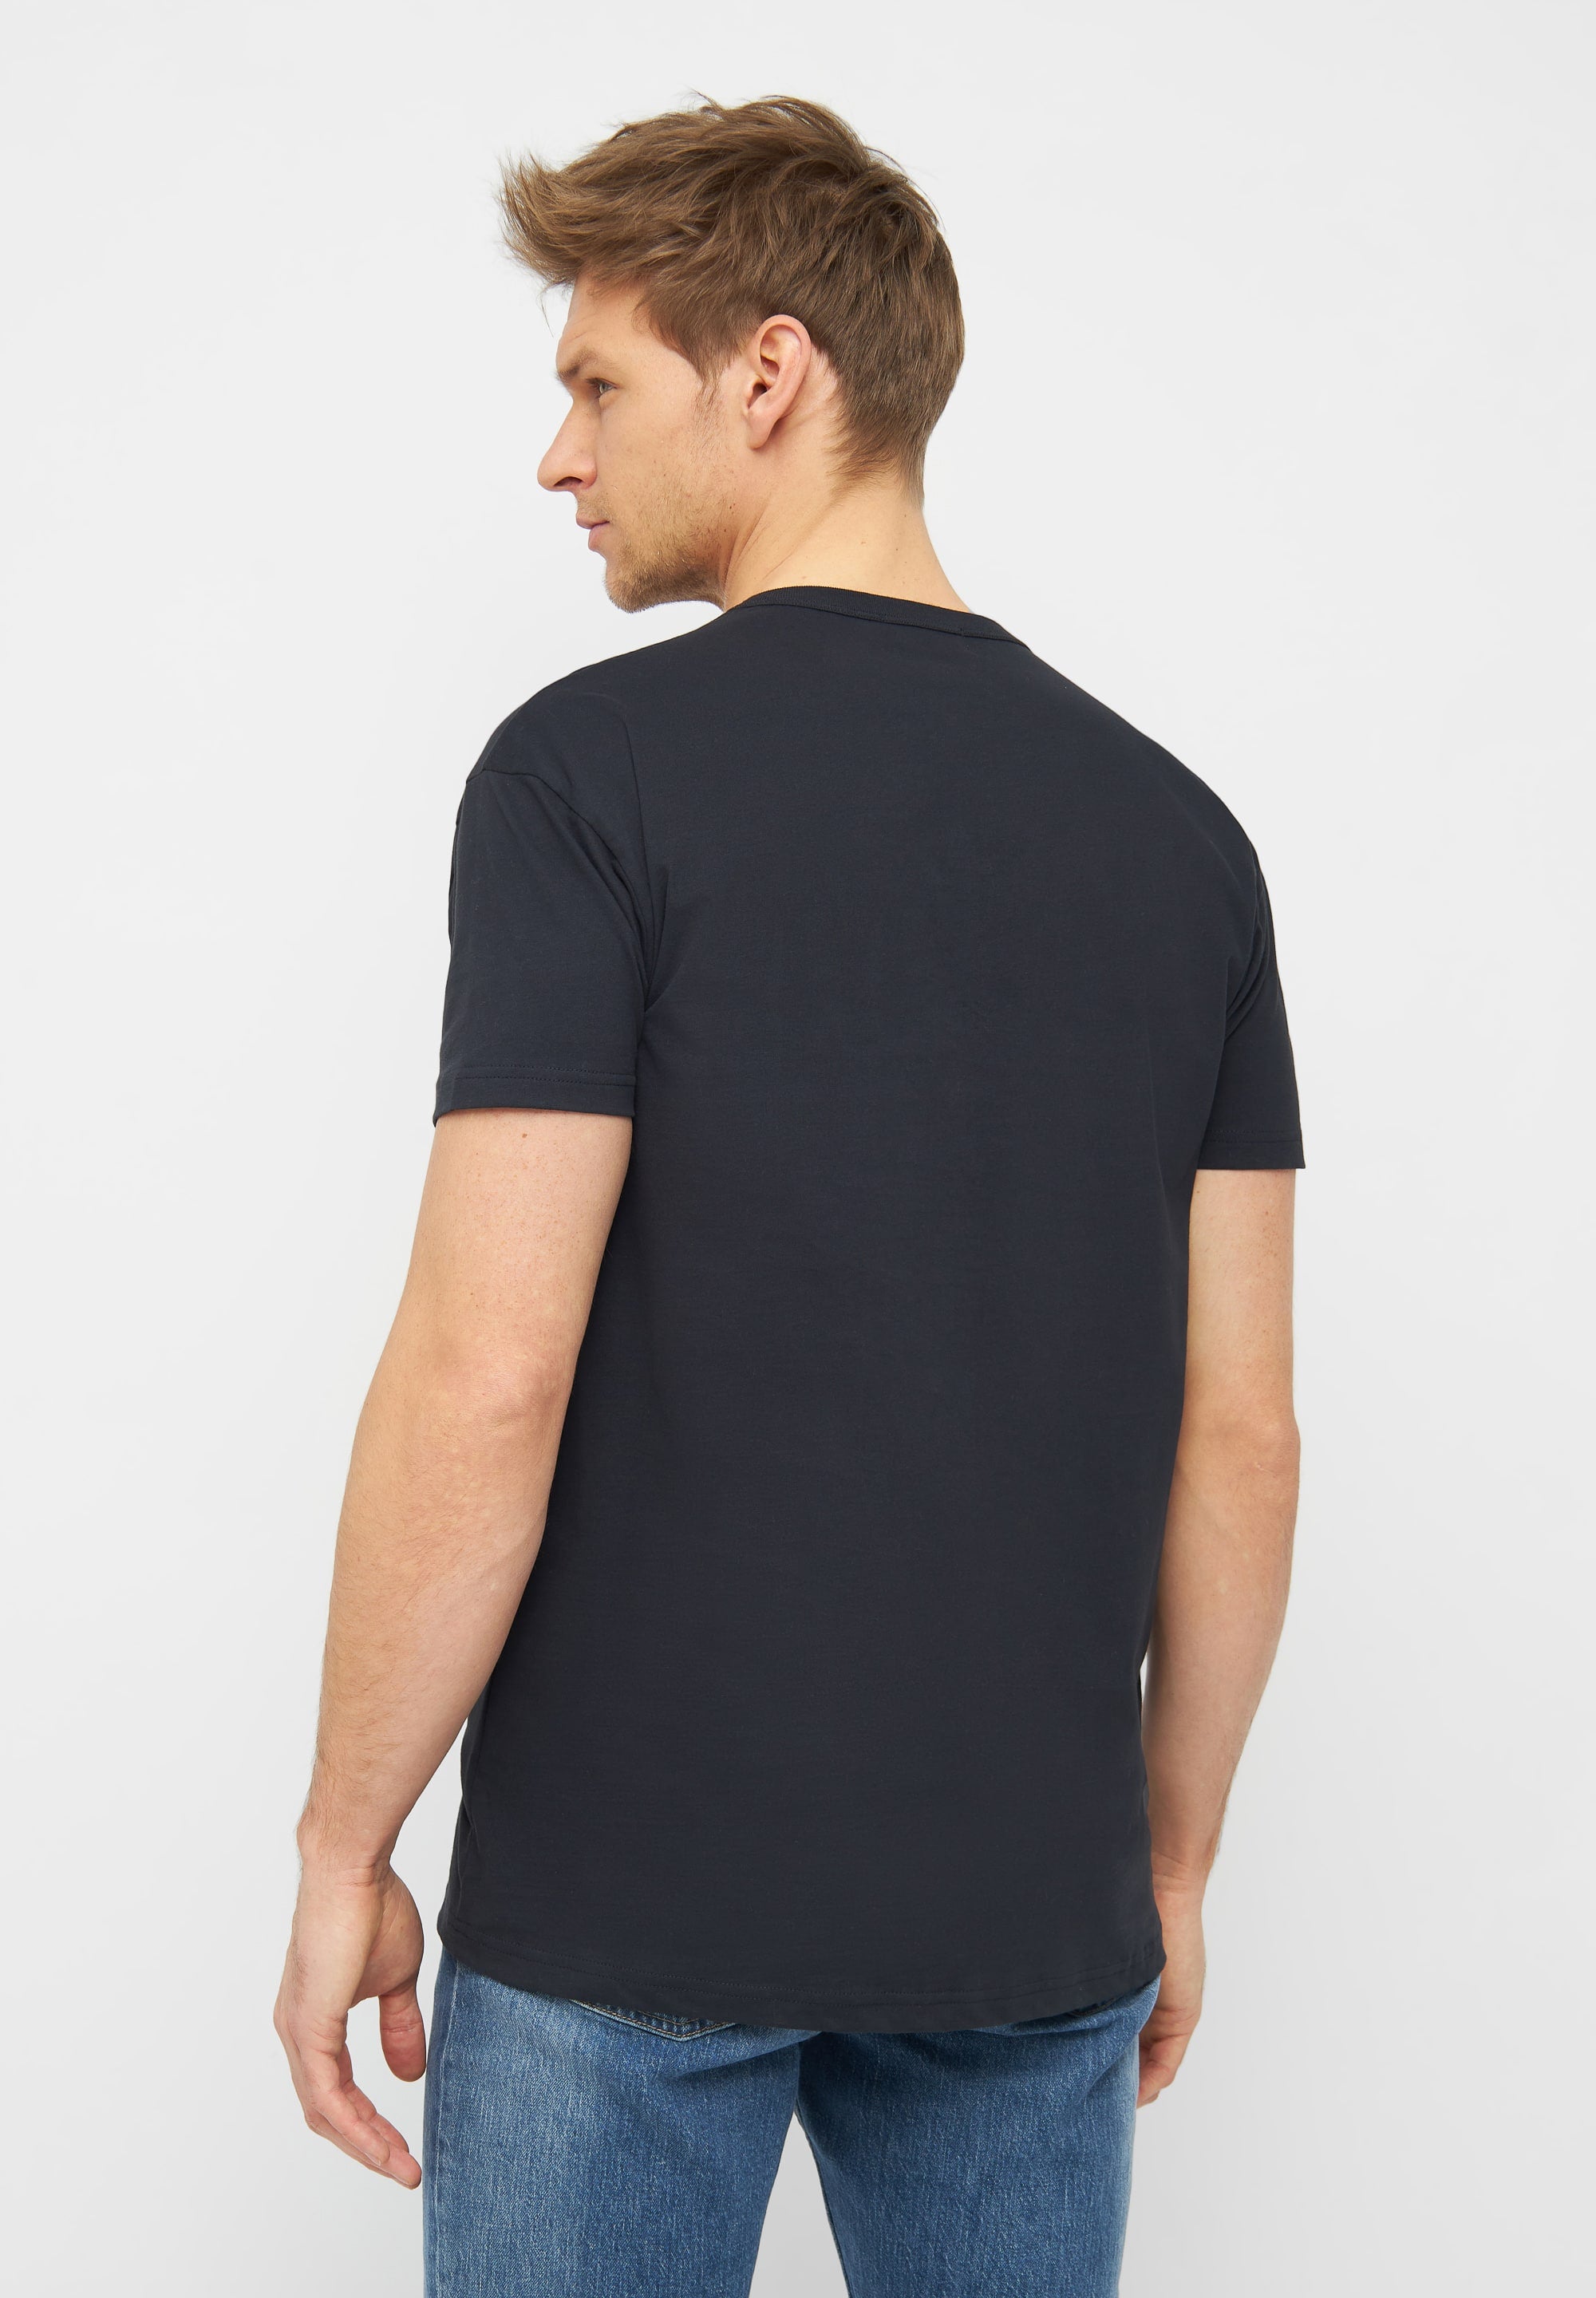 DERBE Wellenross jet Herren T-Shirt, black